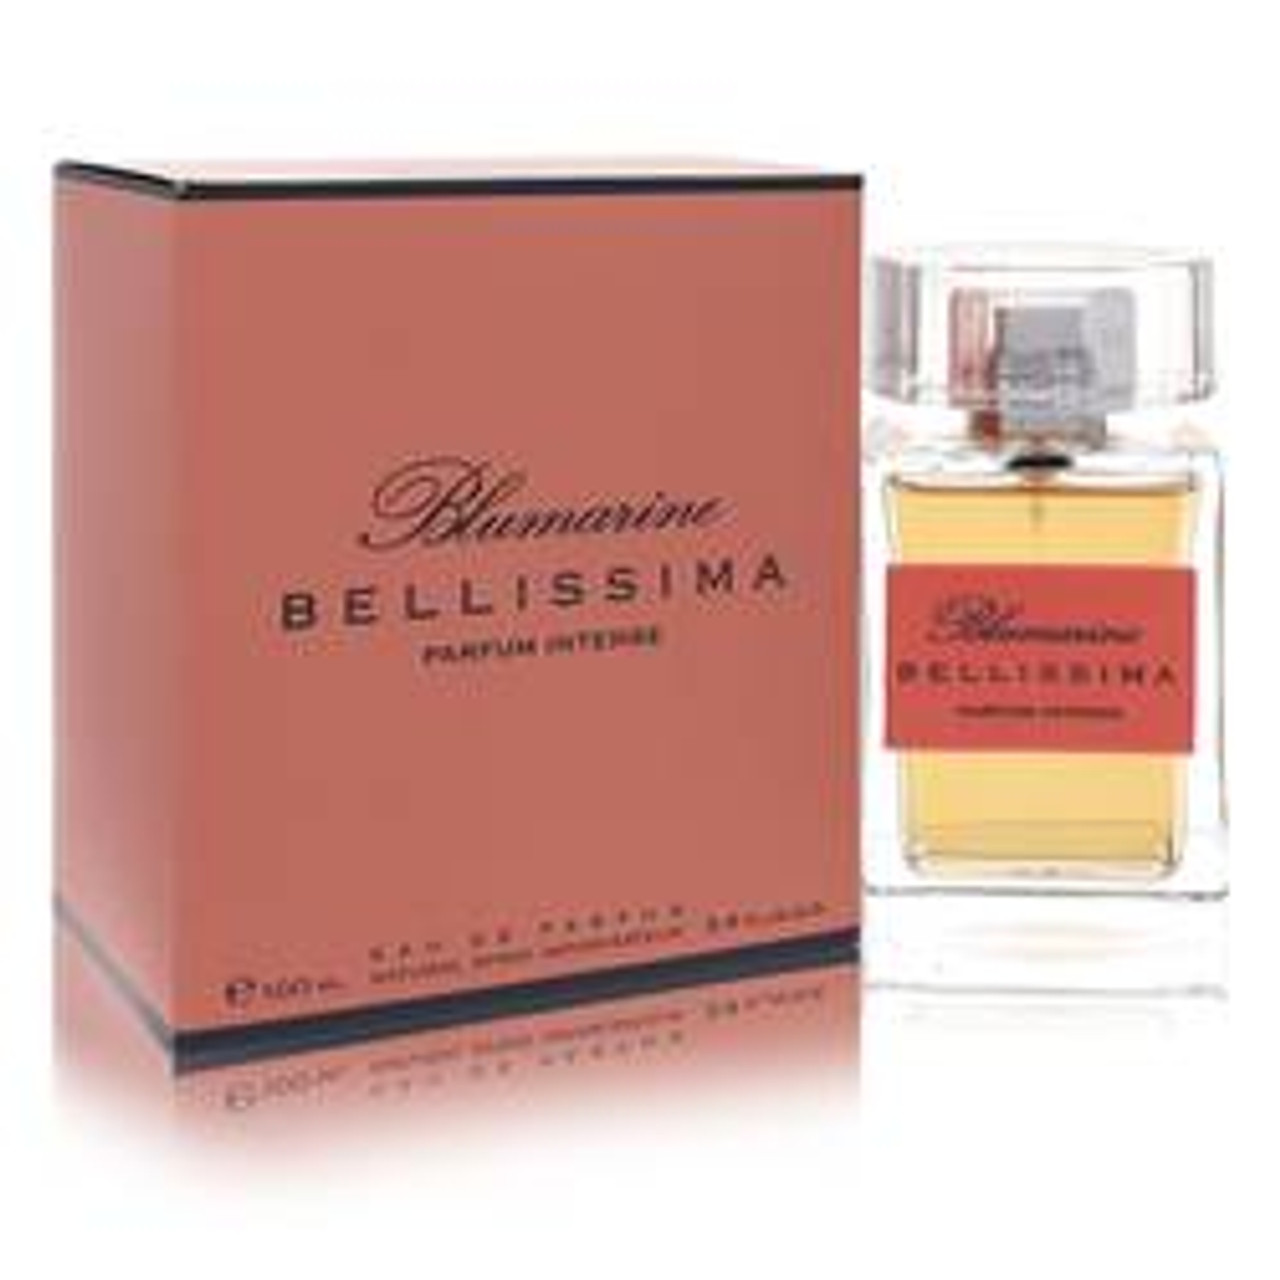 Blumarine Bellissima Intense Perfume By Blumarine Parfums Eau De Parfum Spray Intense 3.4 oz for Women - [From 75.00 - Choose pk Qty ] - *Ships from Miami